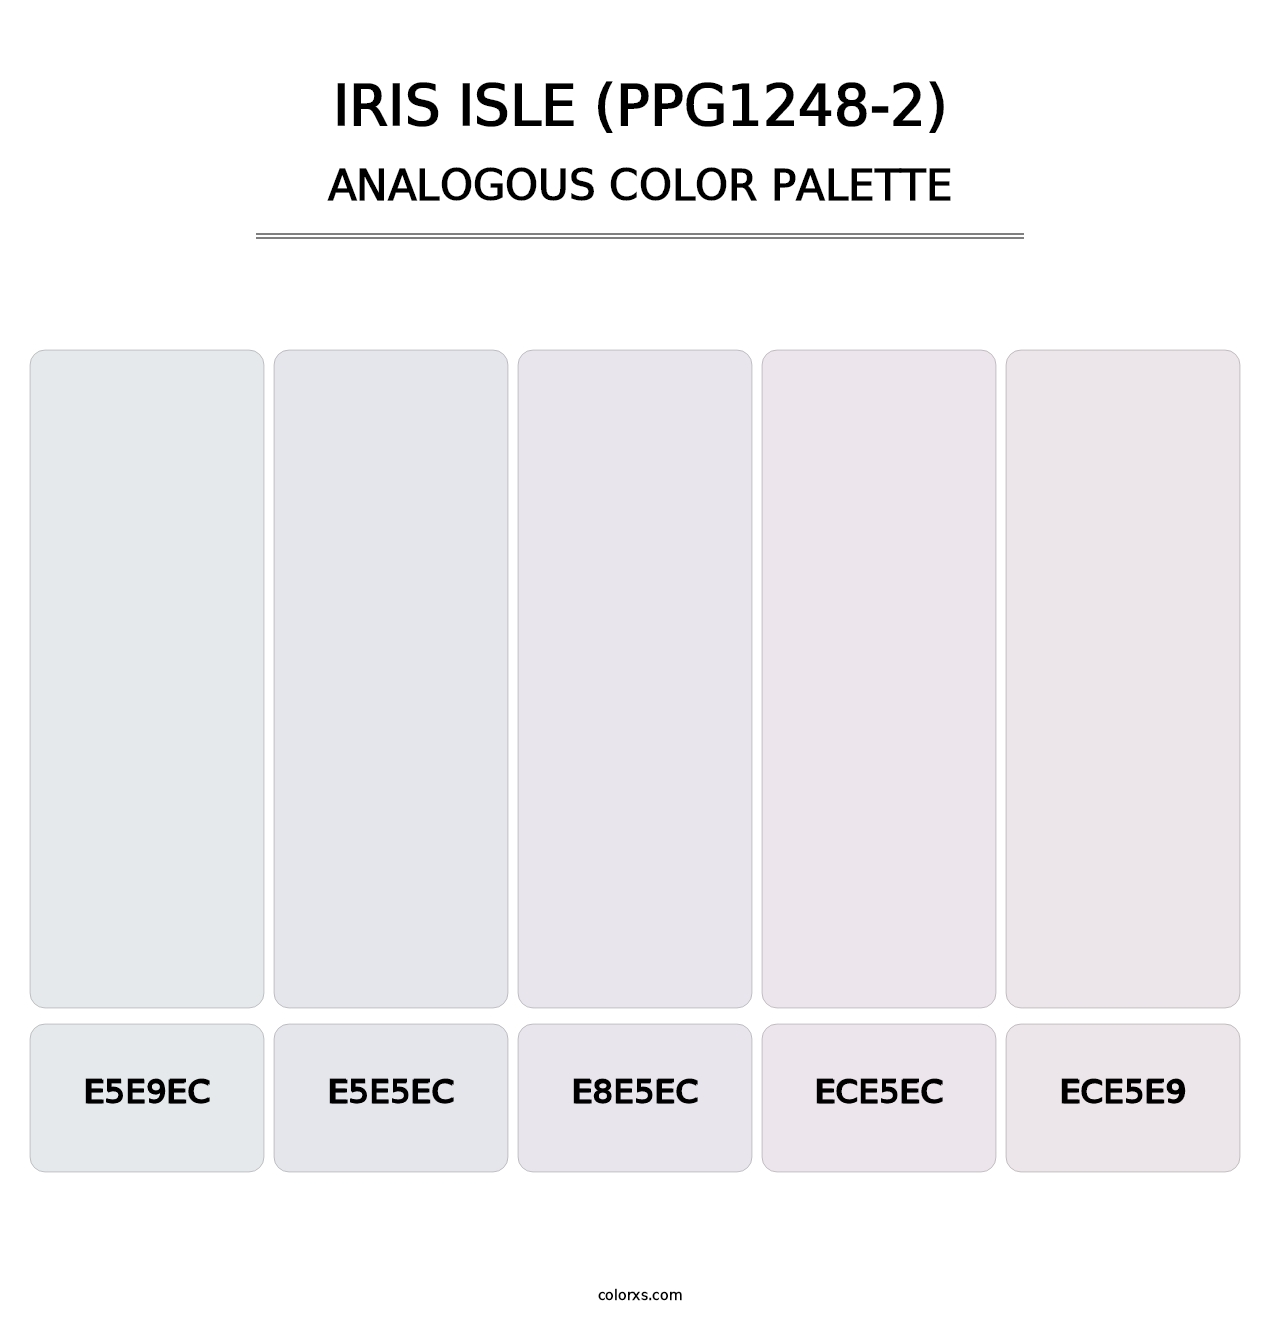 Iris Isle (PPG1248-2) - Analogous Color Palette